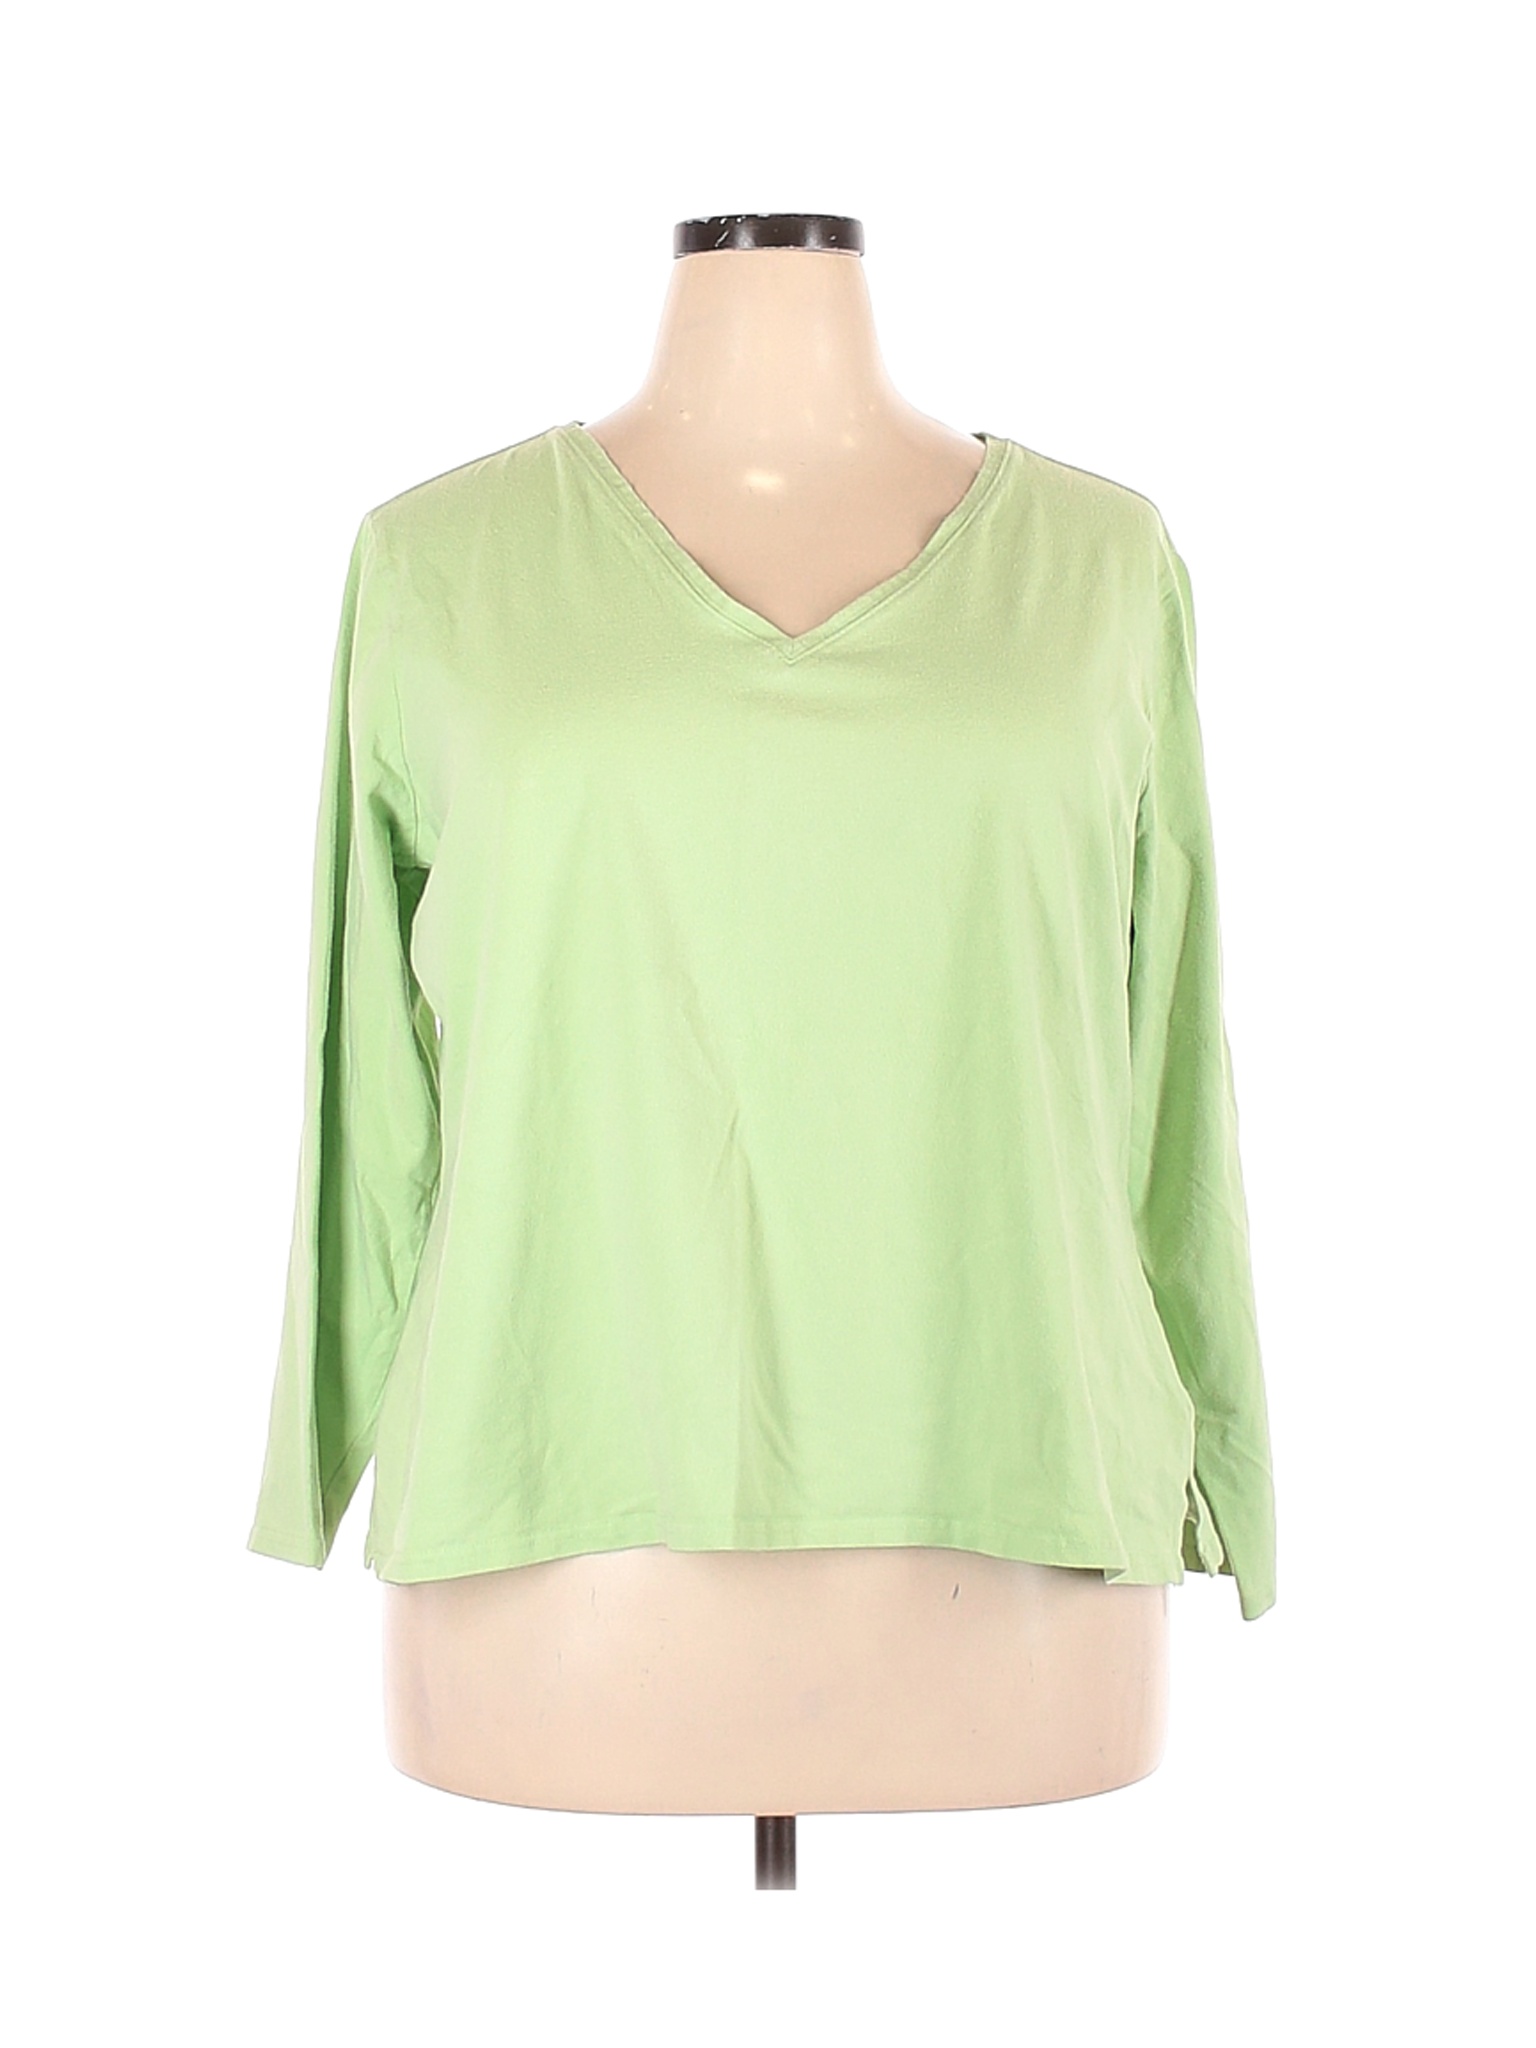 Denim & Co Women Green 3/4 Sleeve T-Shirt 2X Plus | eBay